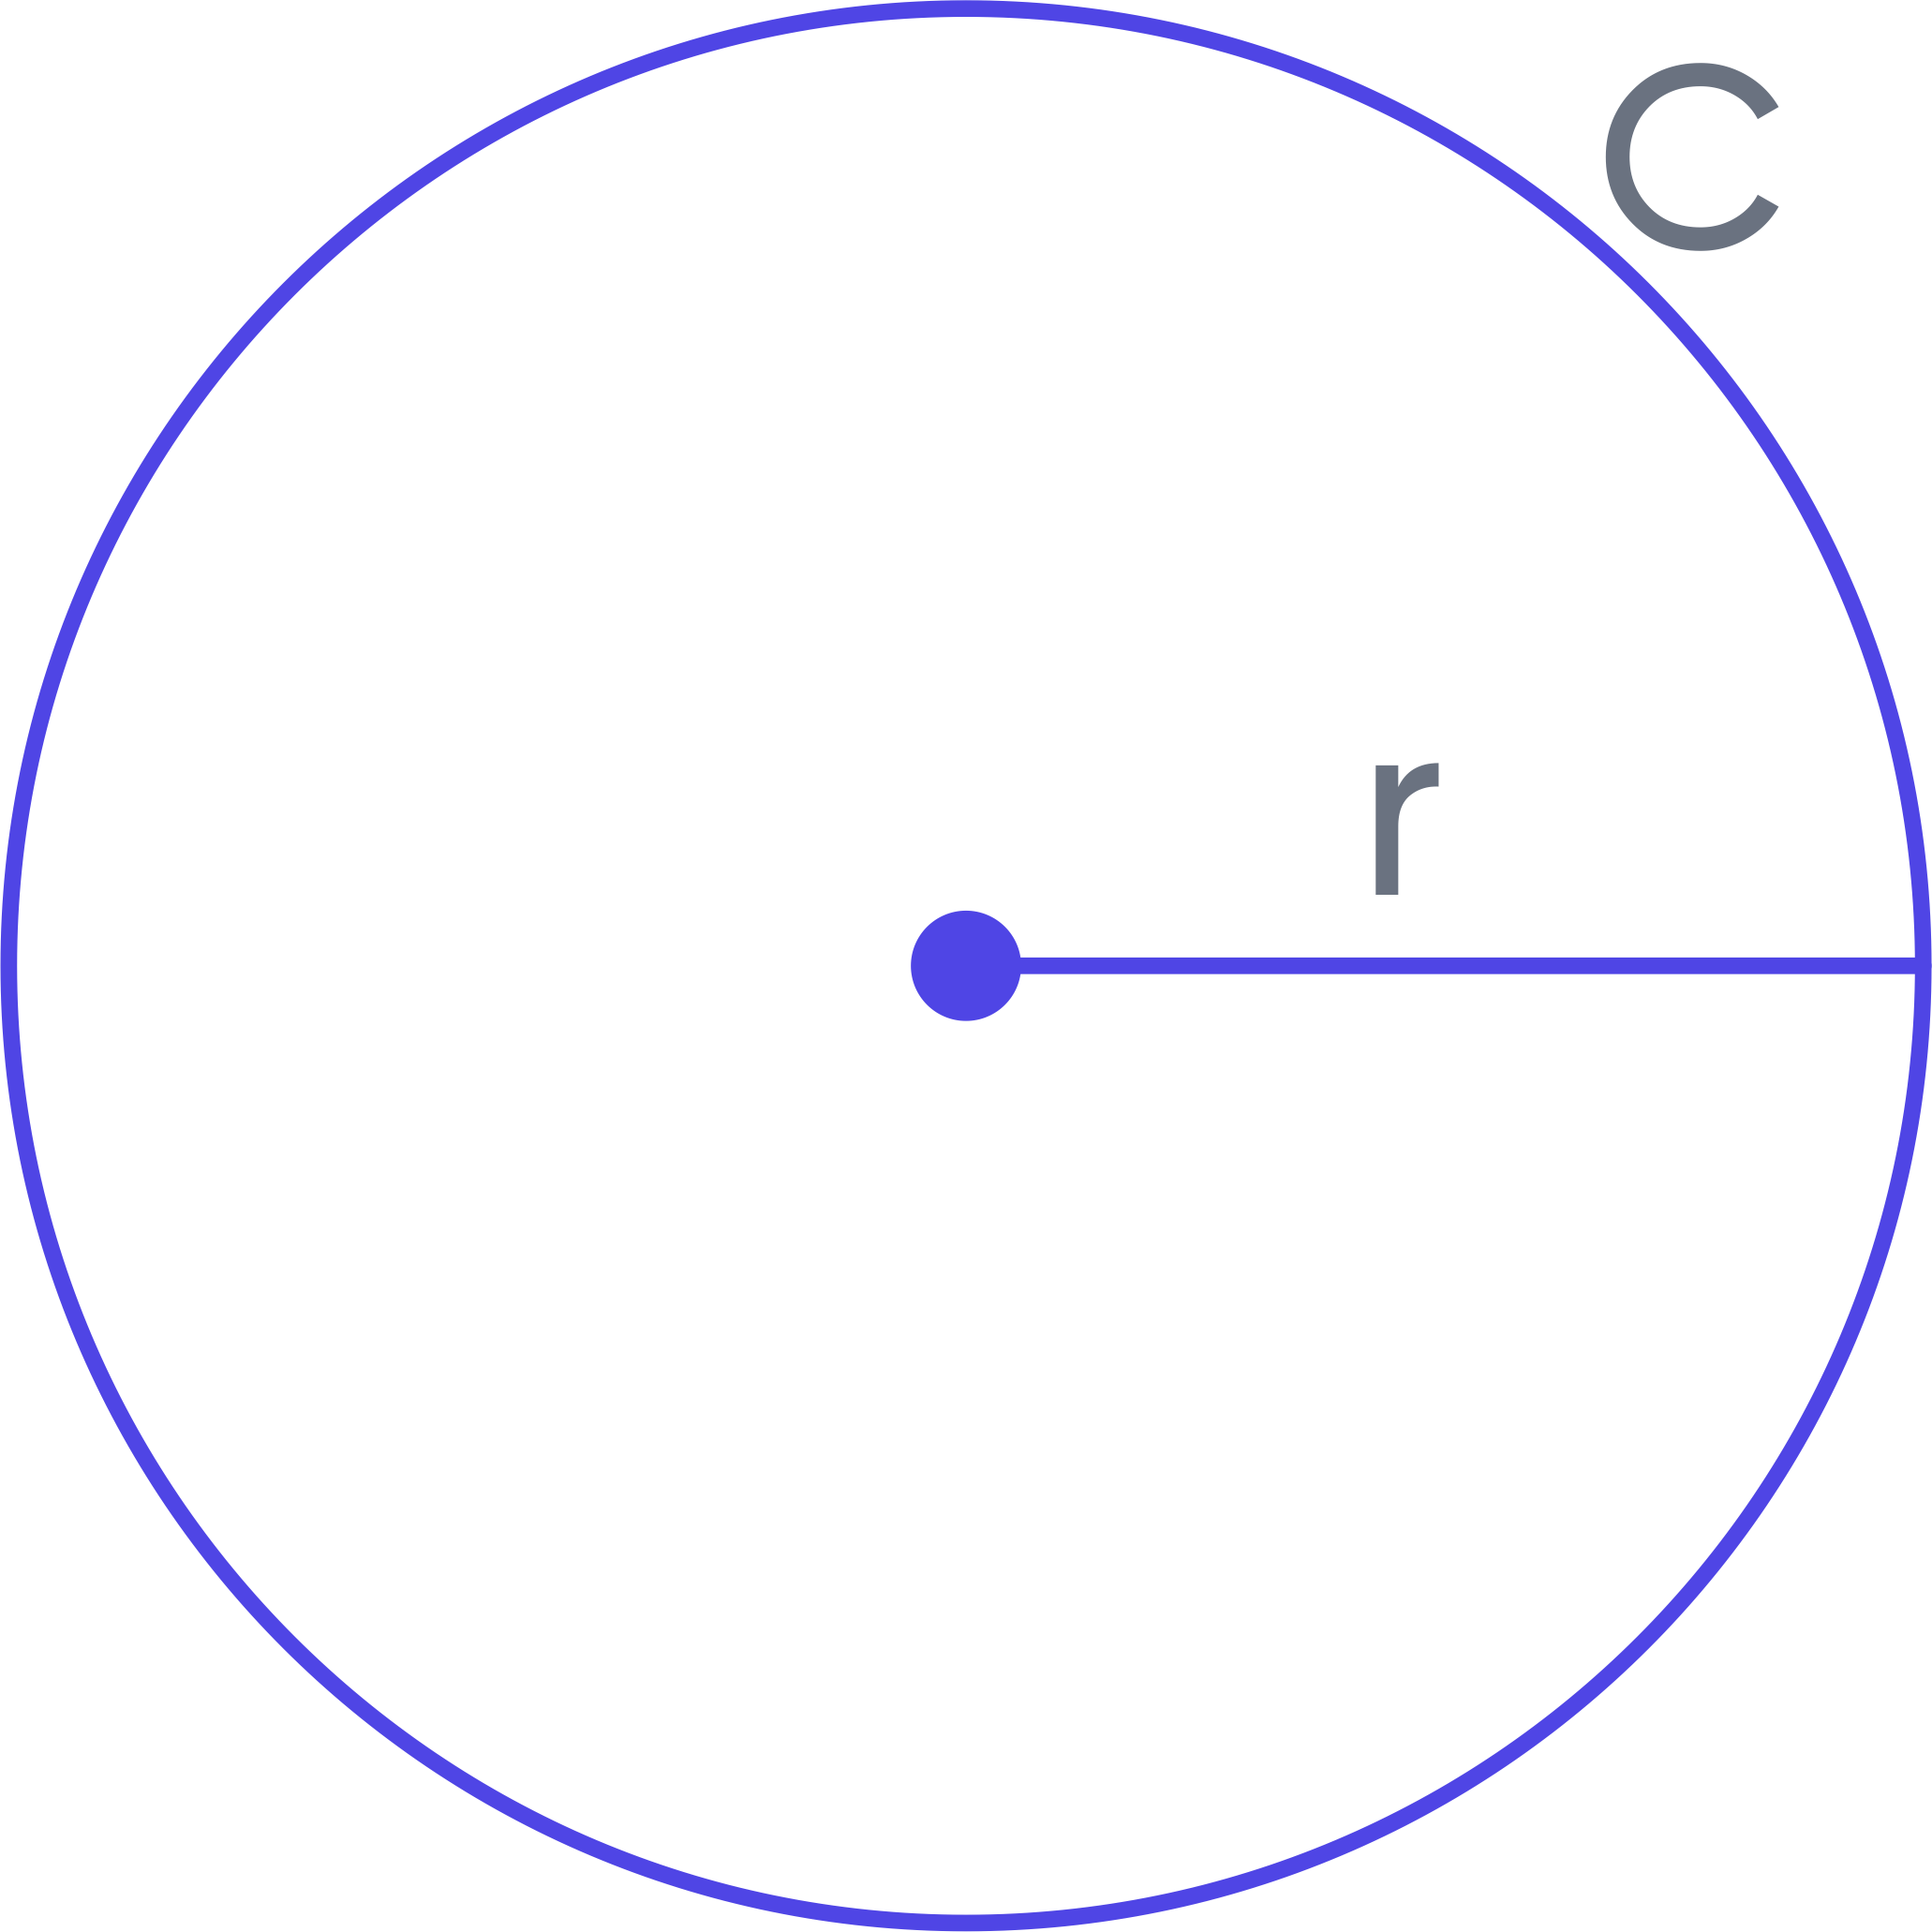 Circonférence et rayon du cercle